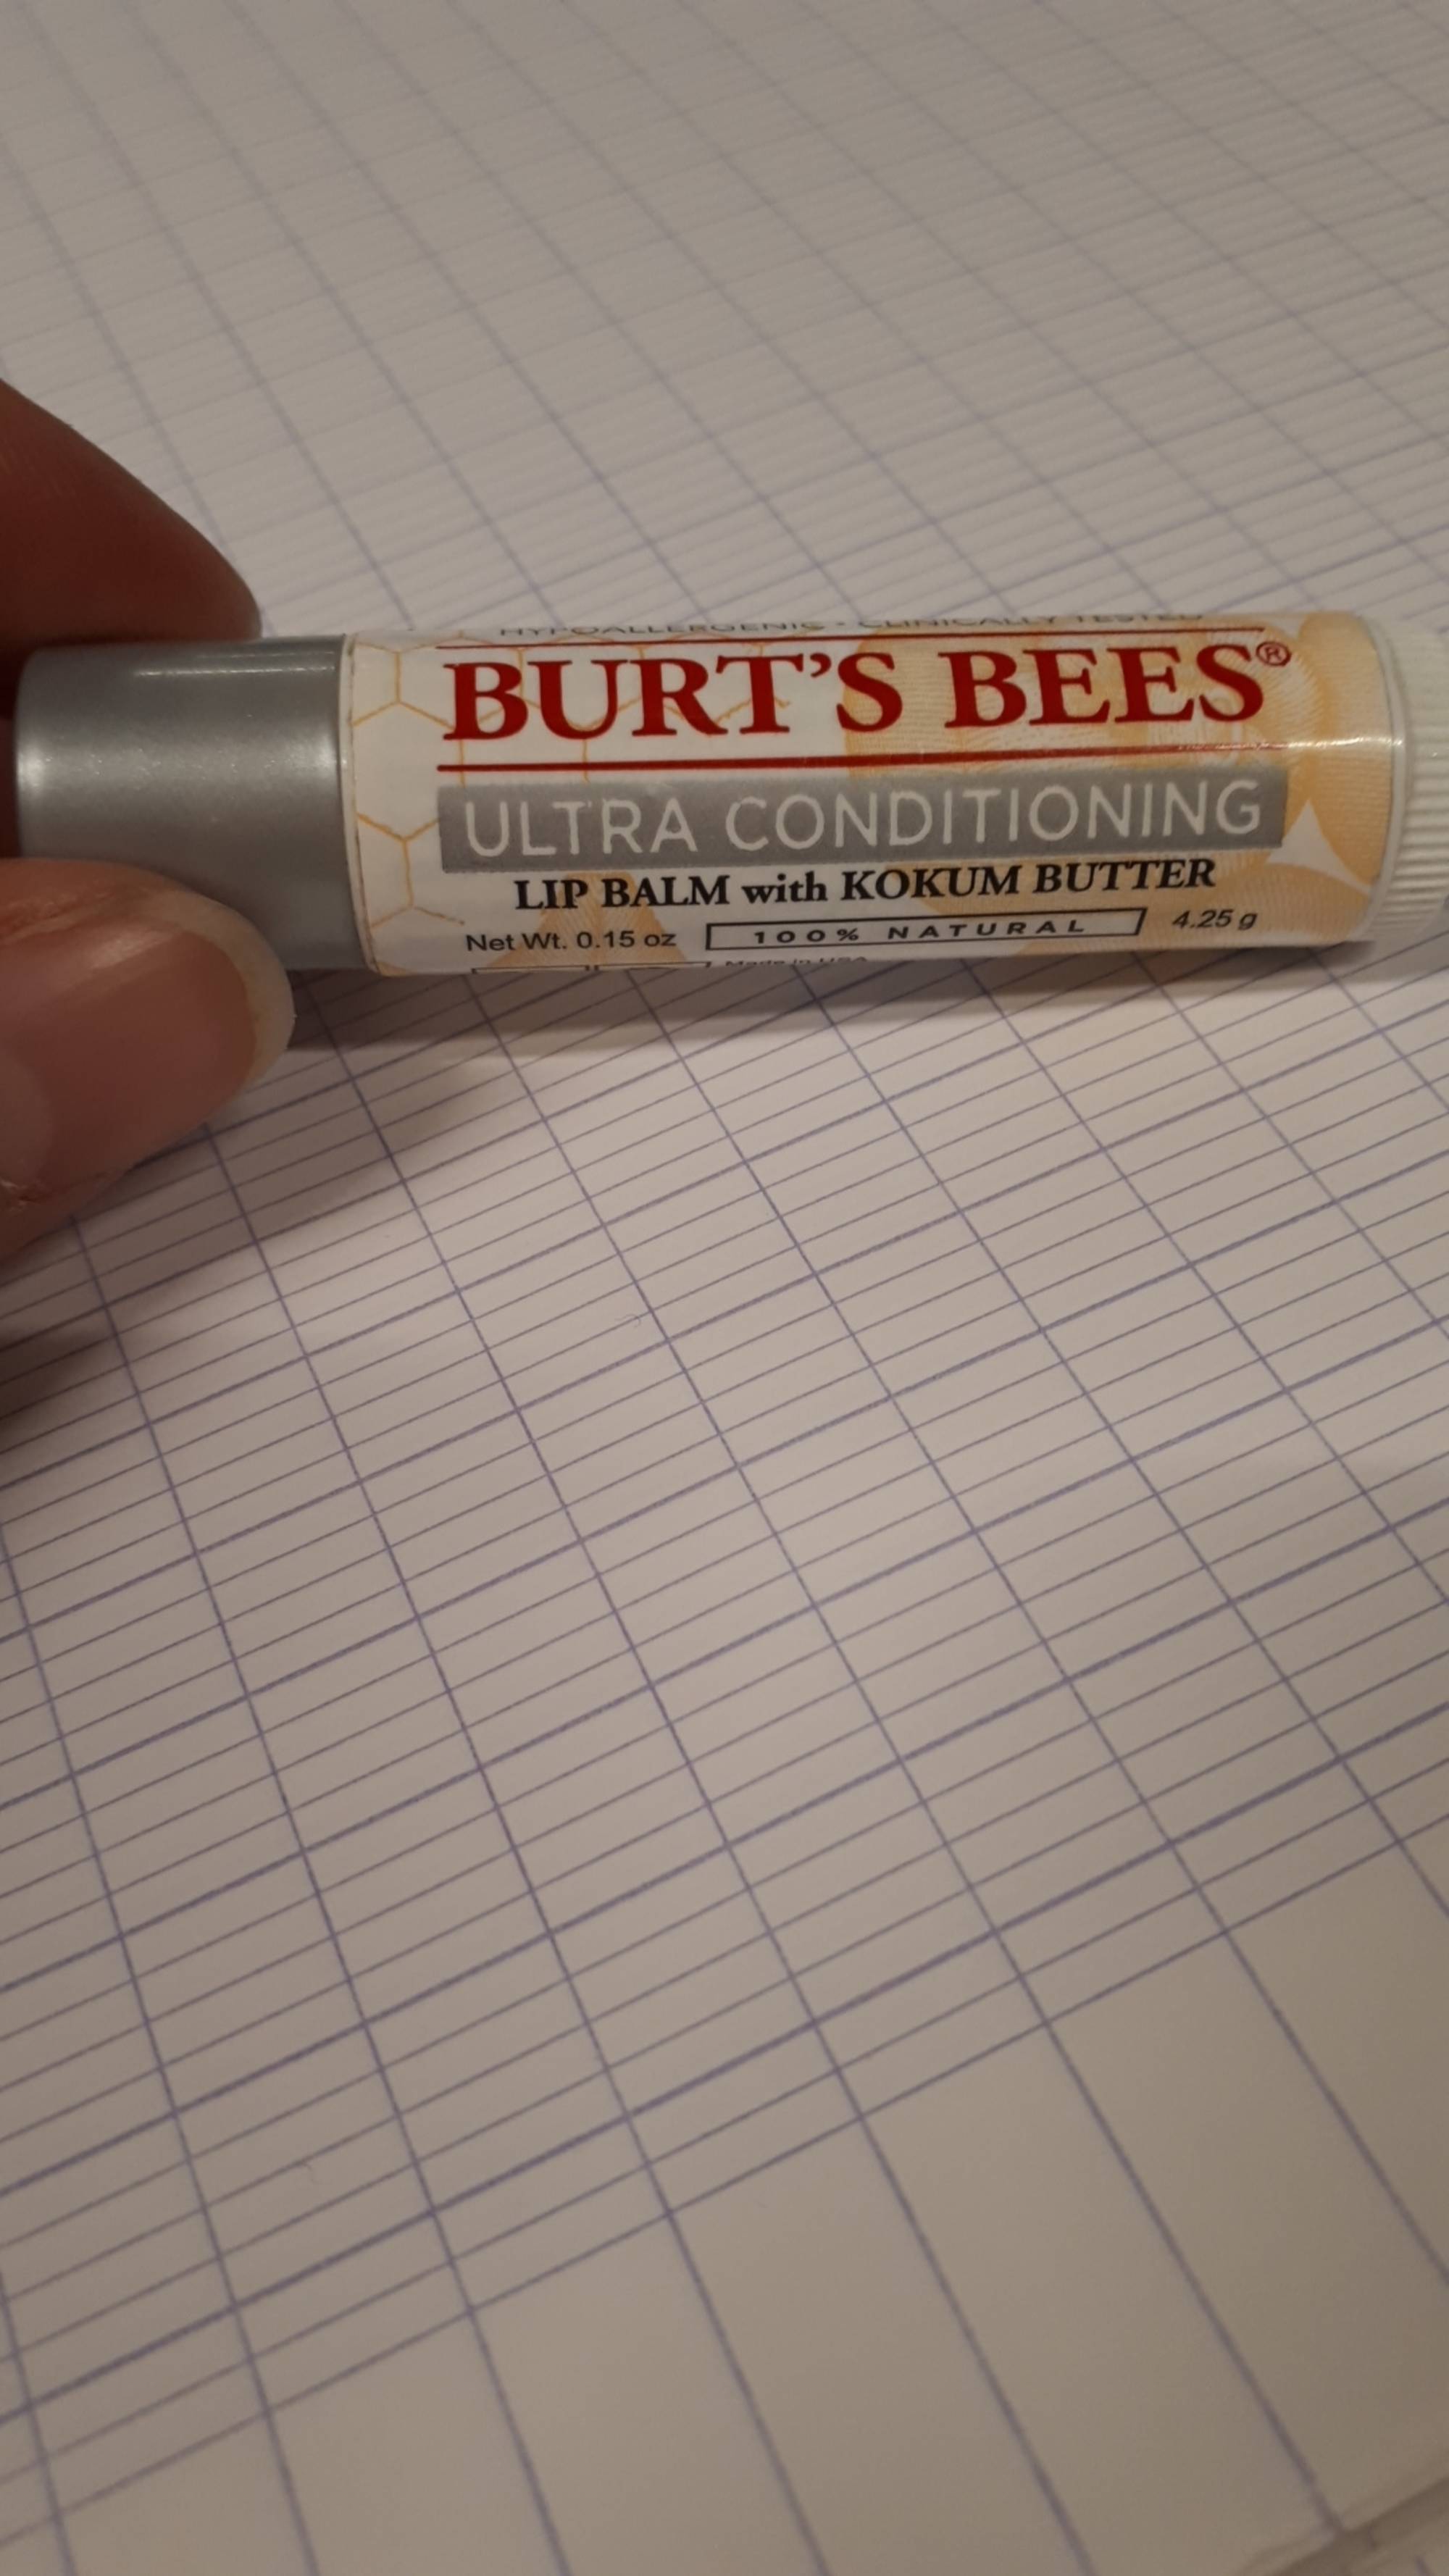 BURT'S BEES - Ultra conditioning - Lip balm with kokum butter